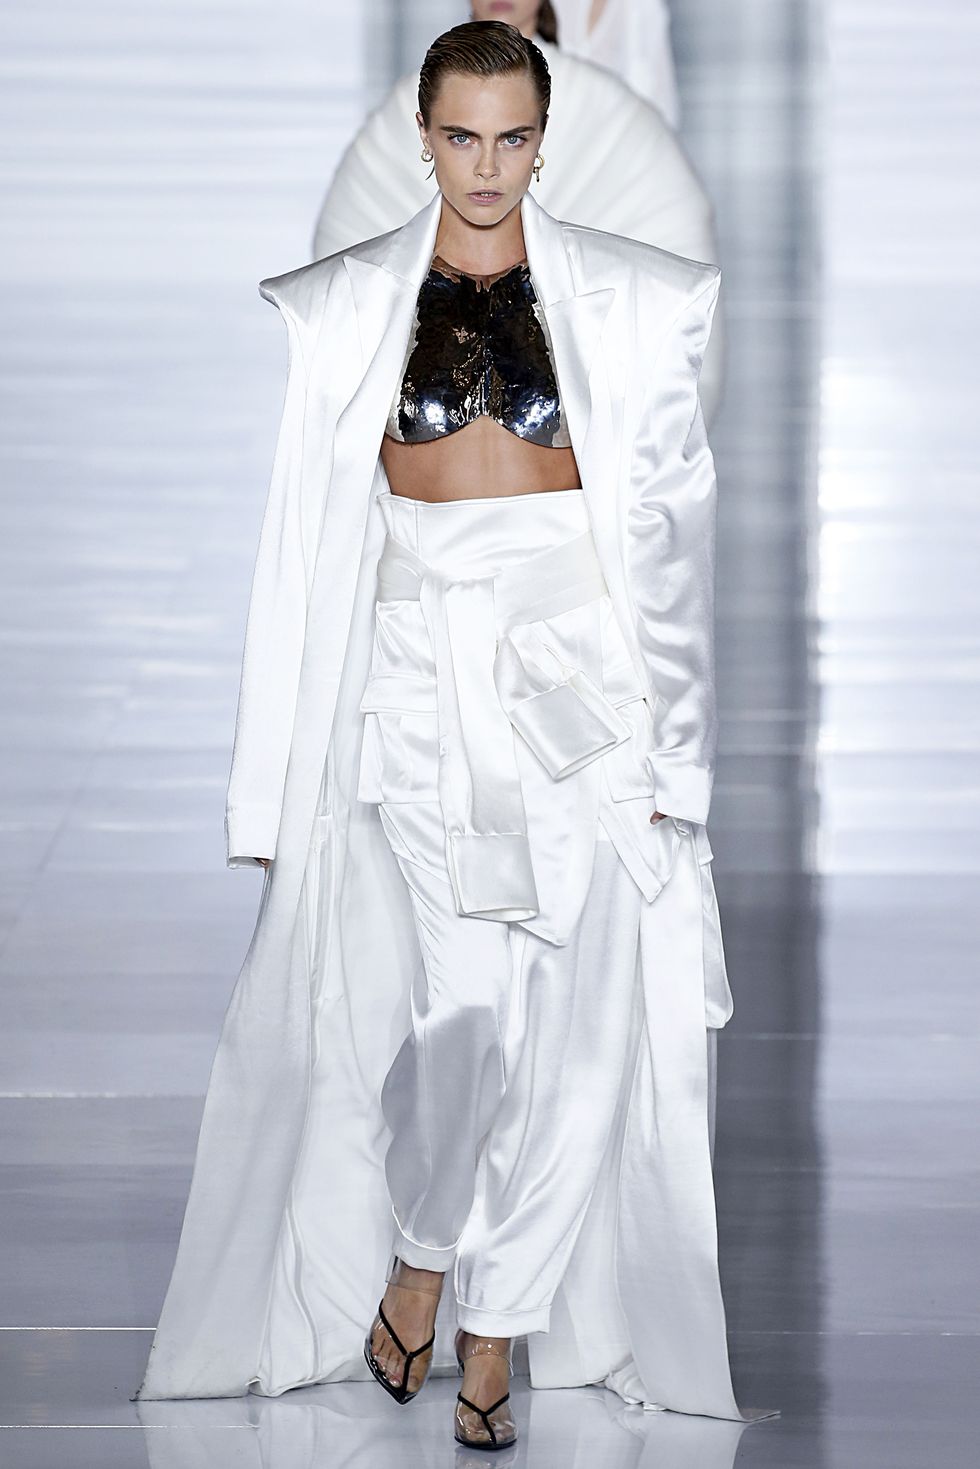 Cara Delevingne Opened Balmain Show at Paris Fashion Week While Lip ...